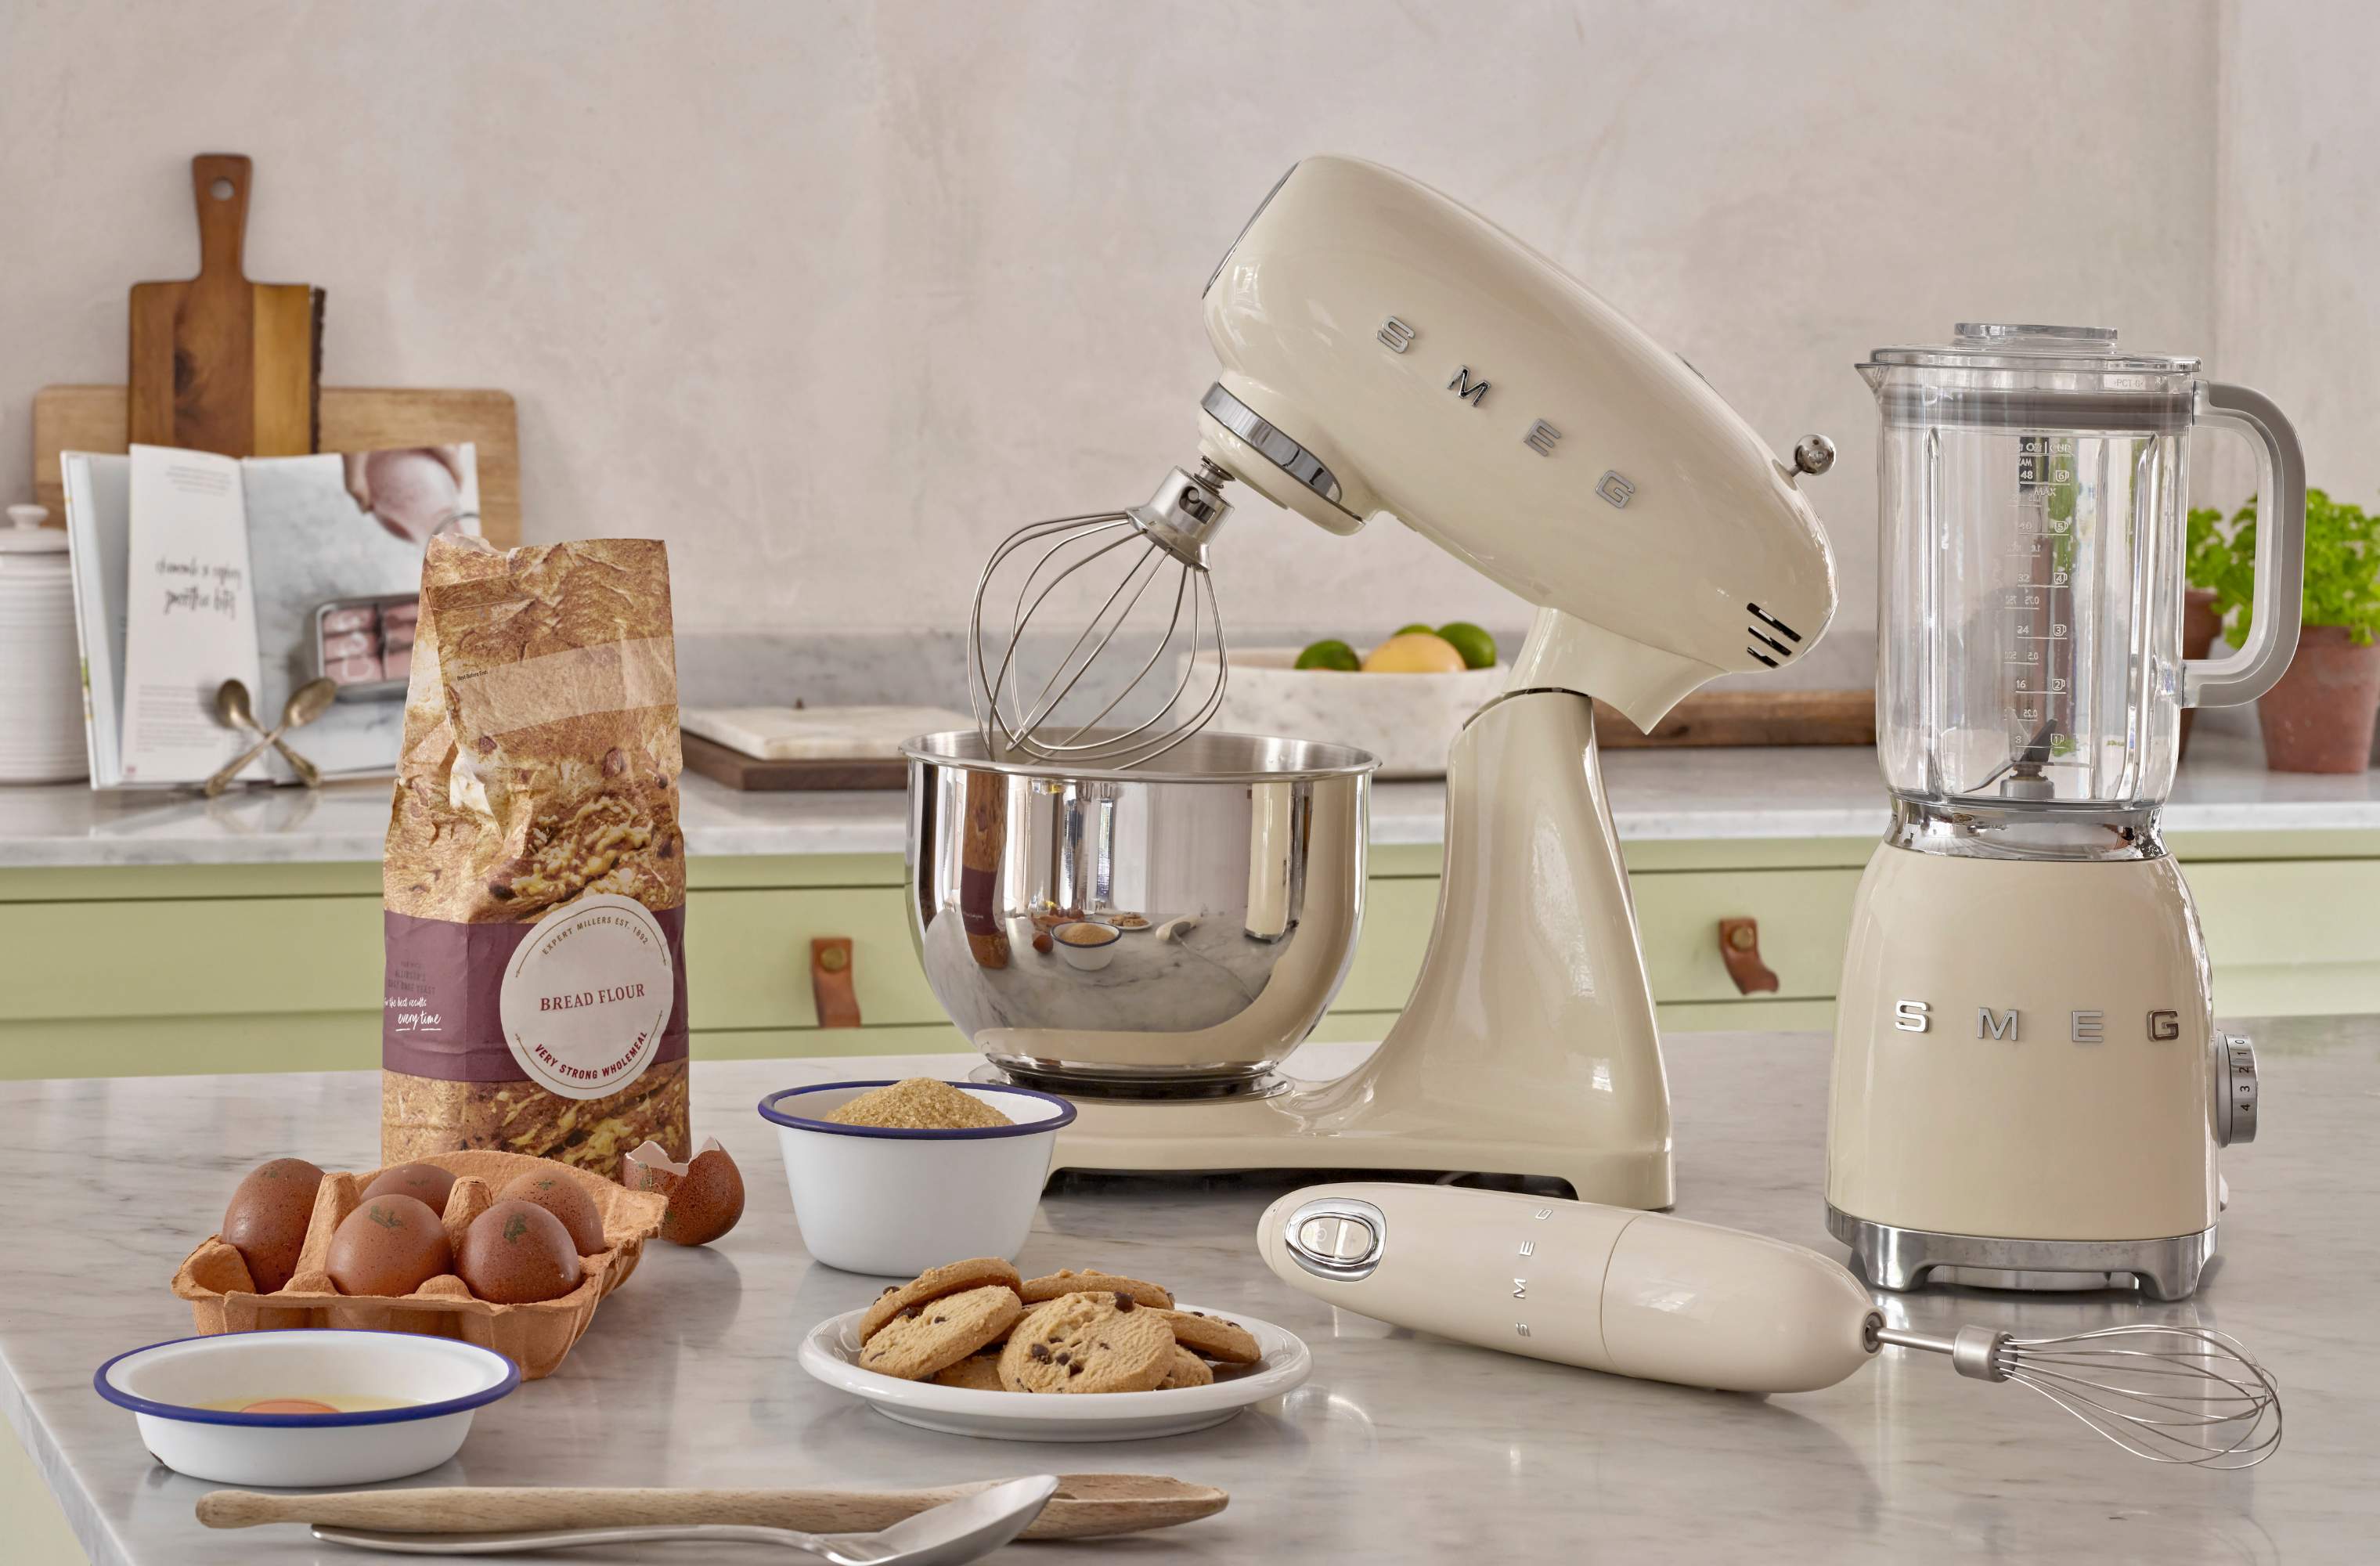 Smeg-50's-style-køkkenmaskine-brødbagning-kager-cookies